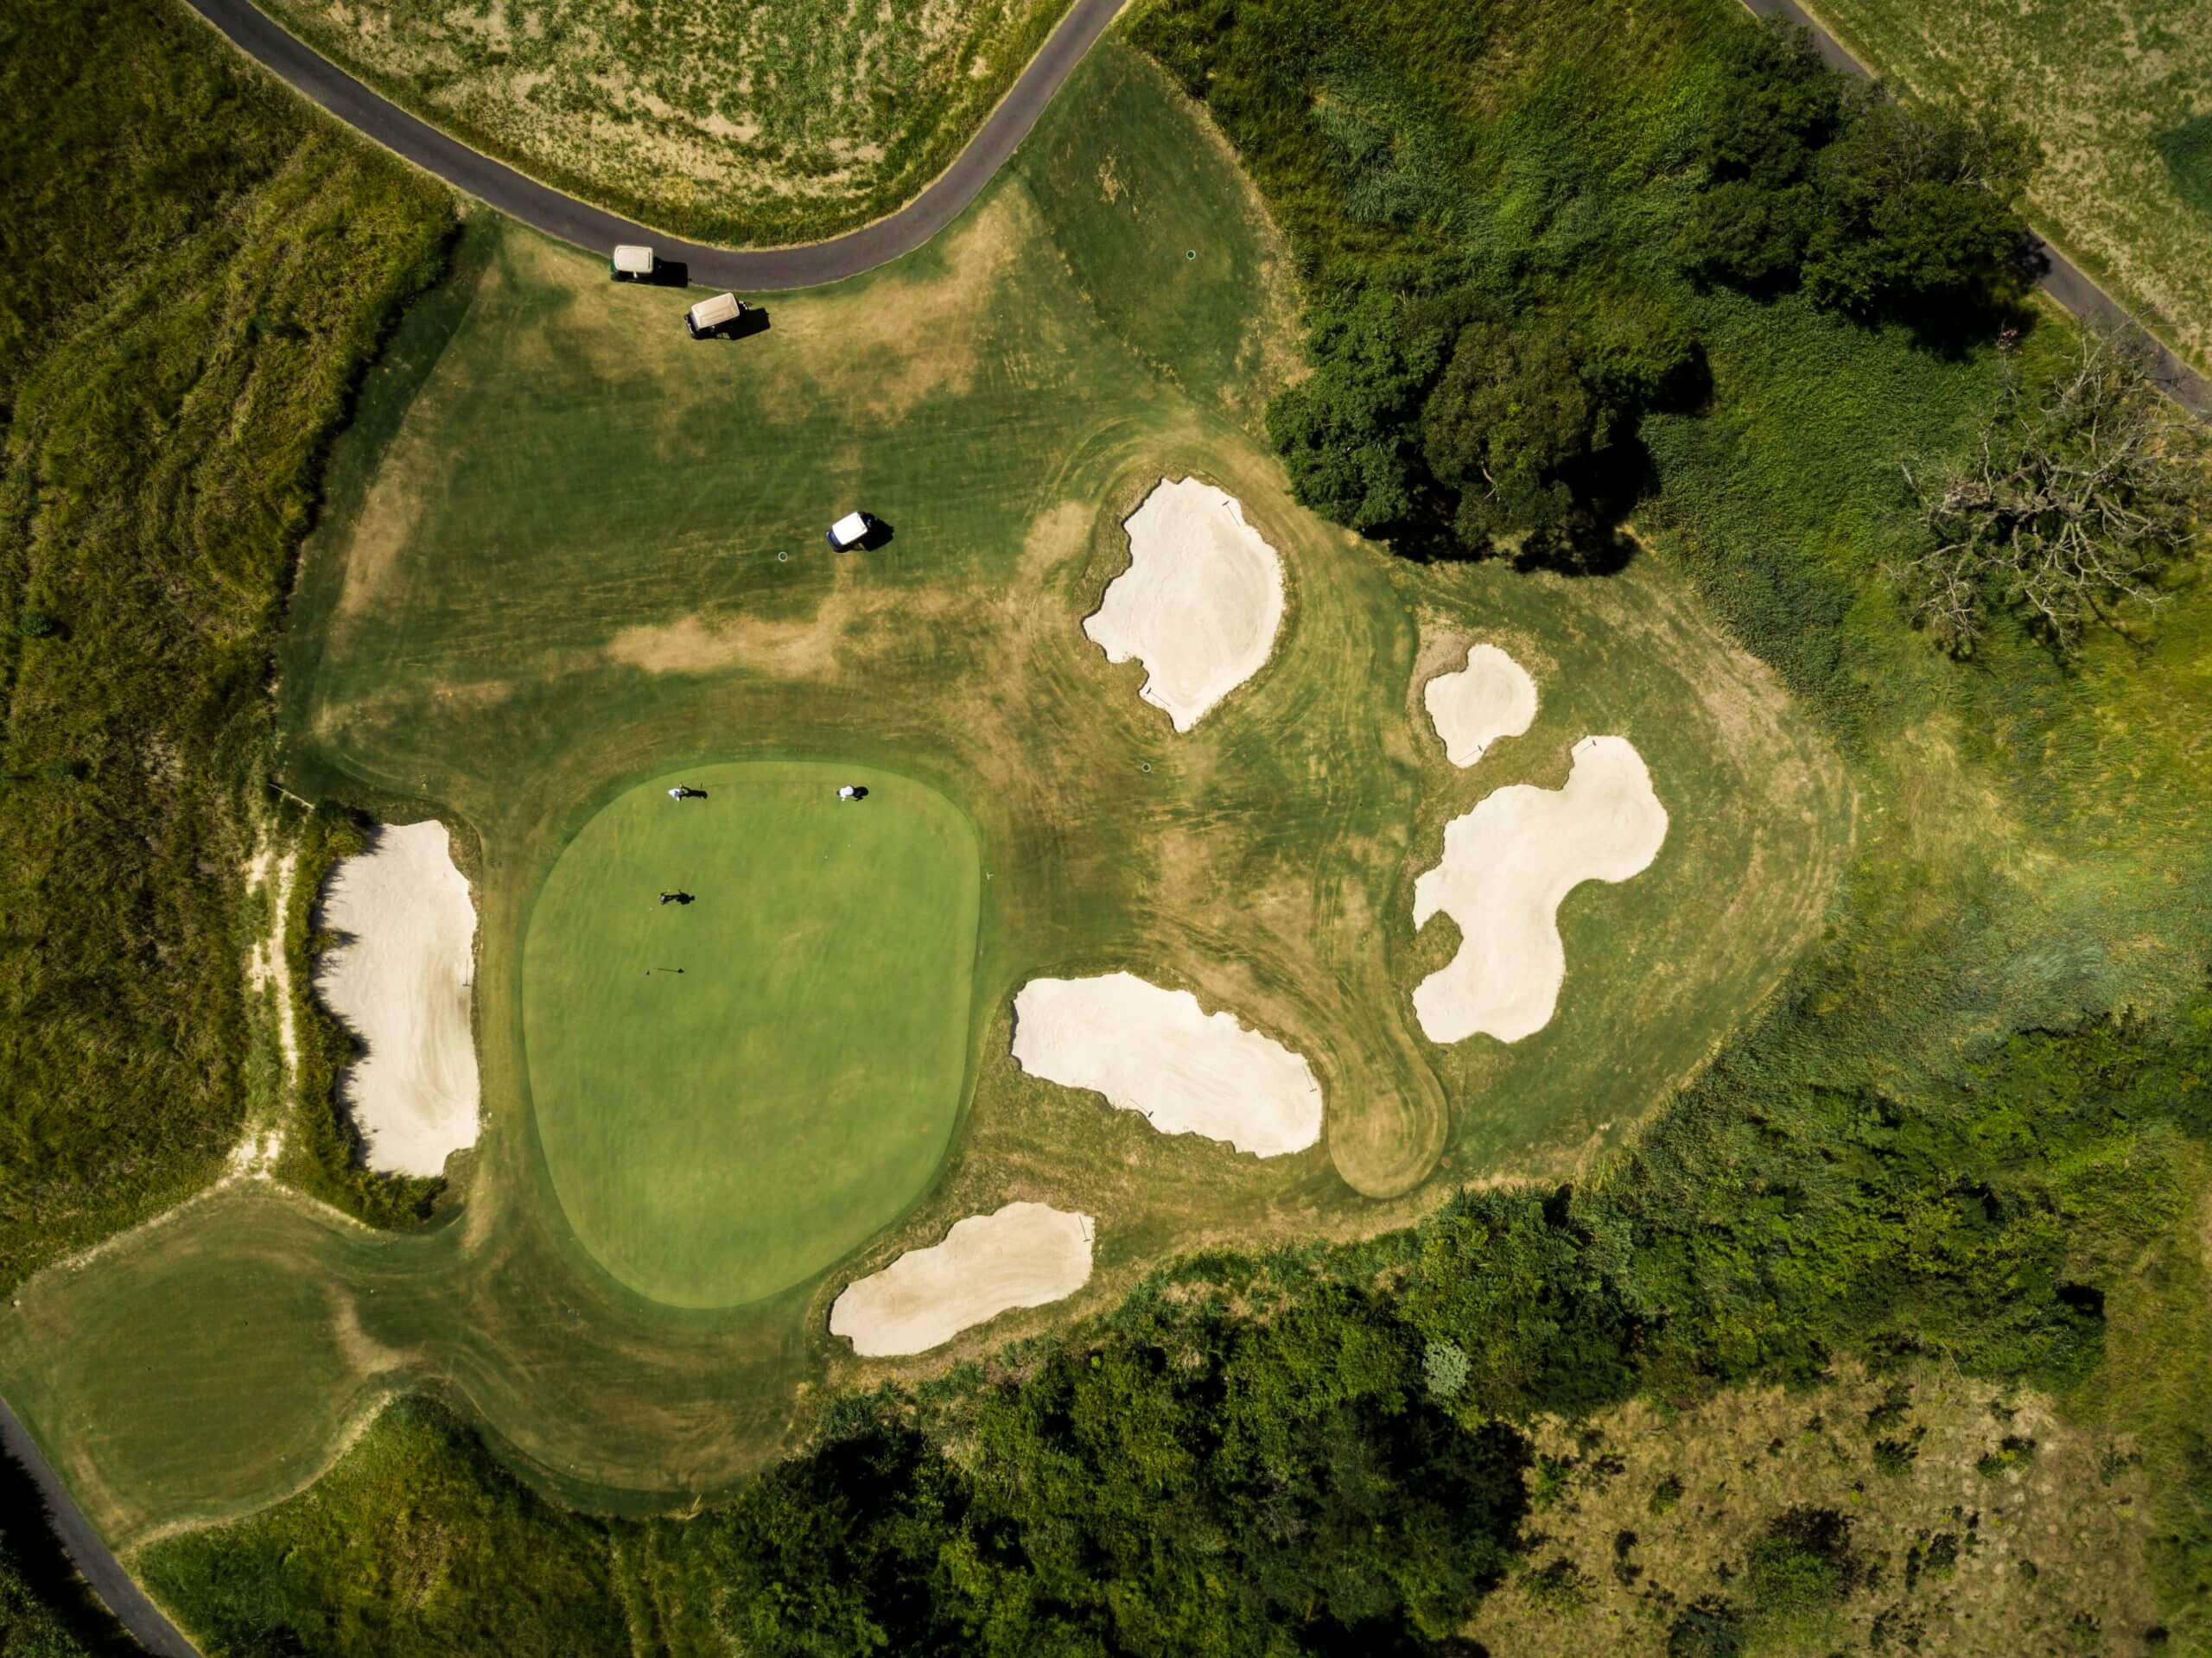 Campo de Golfe de 18 buracos por Arnold Palmer - Fazenda Boa Vista